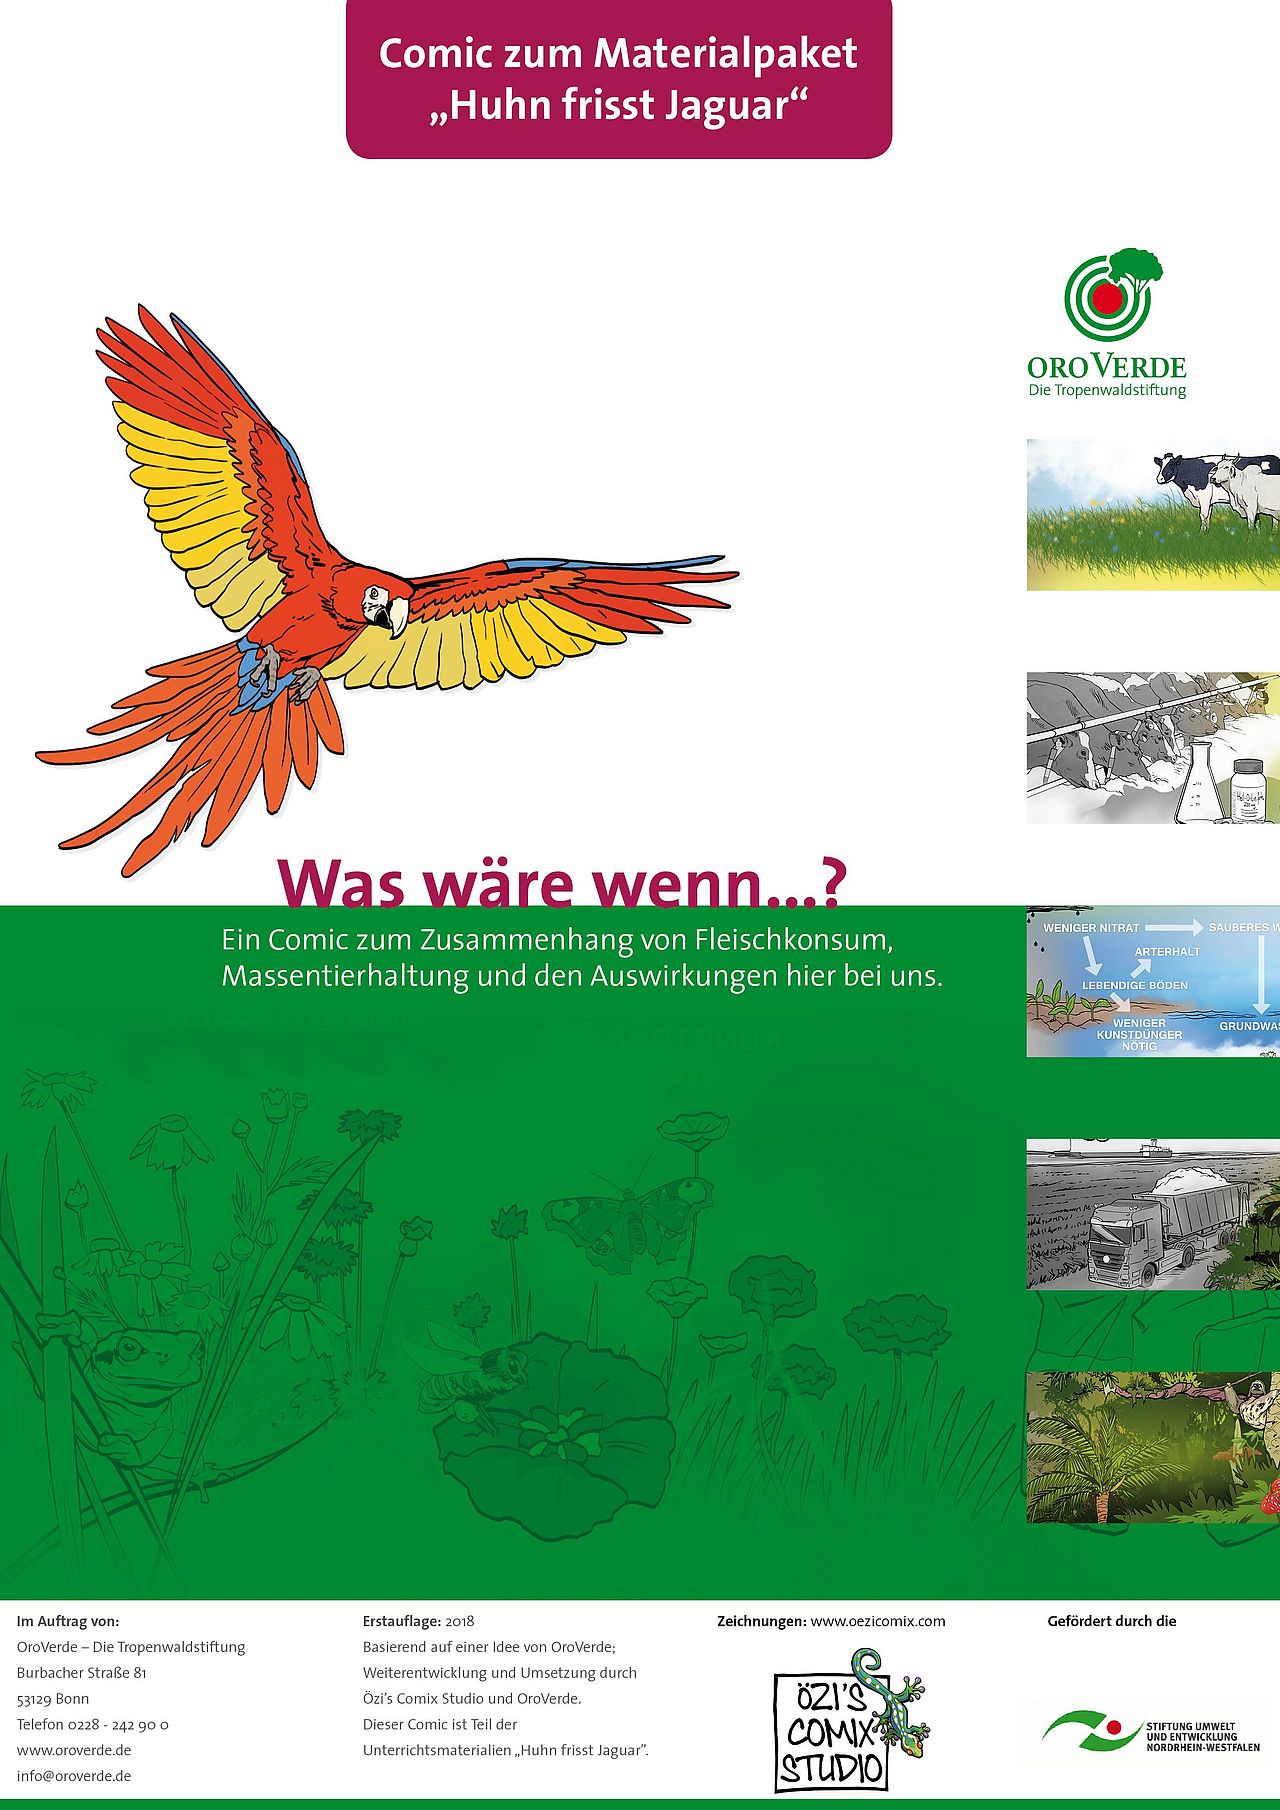 Deckblatt des Umweltbildungscomics ©OroVerde/ÖZI'S COMIX STUDIO